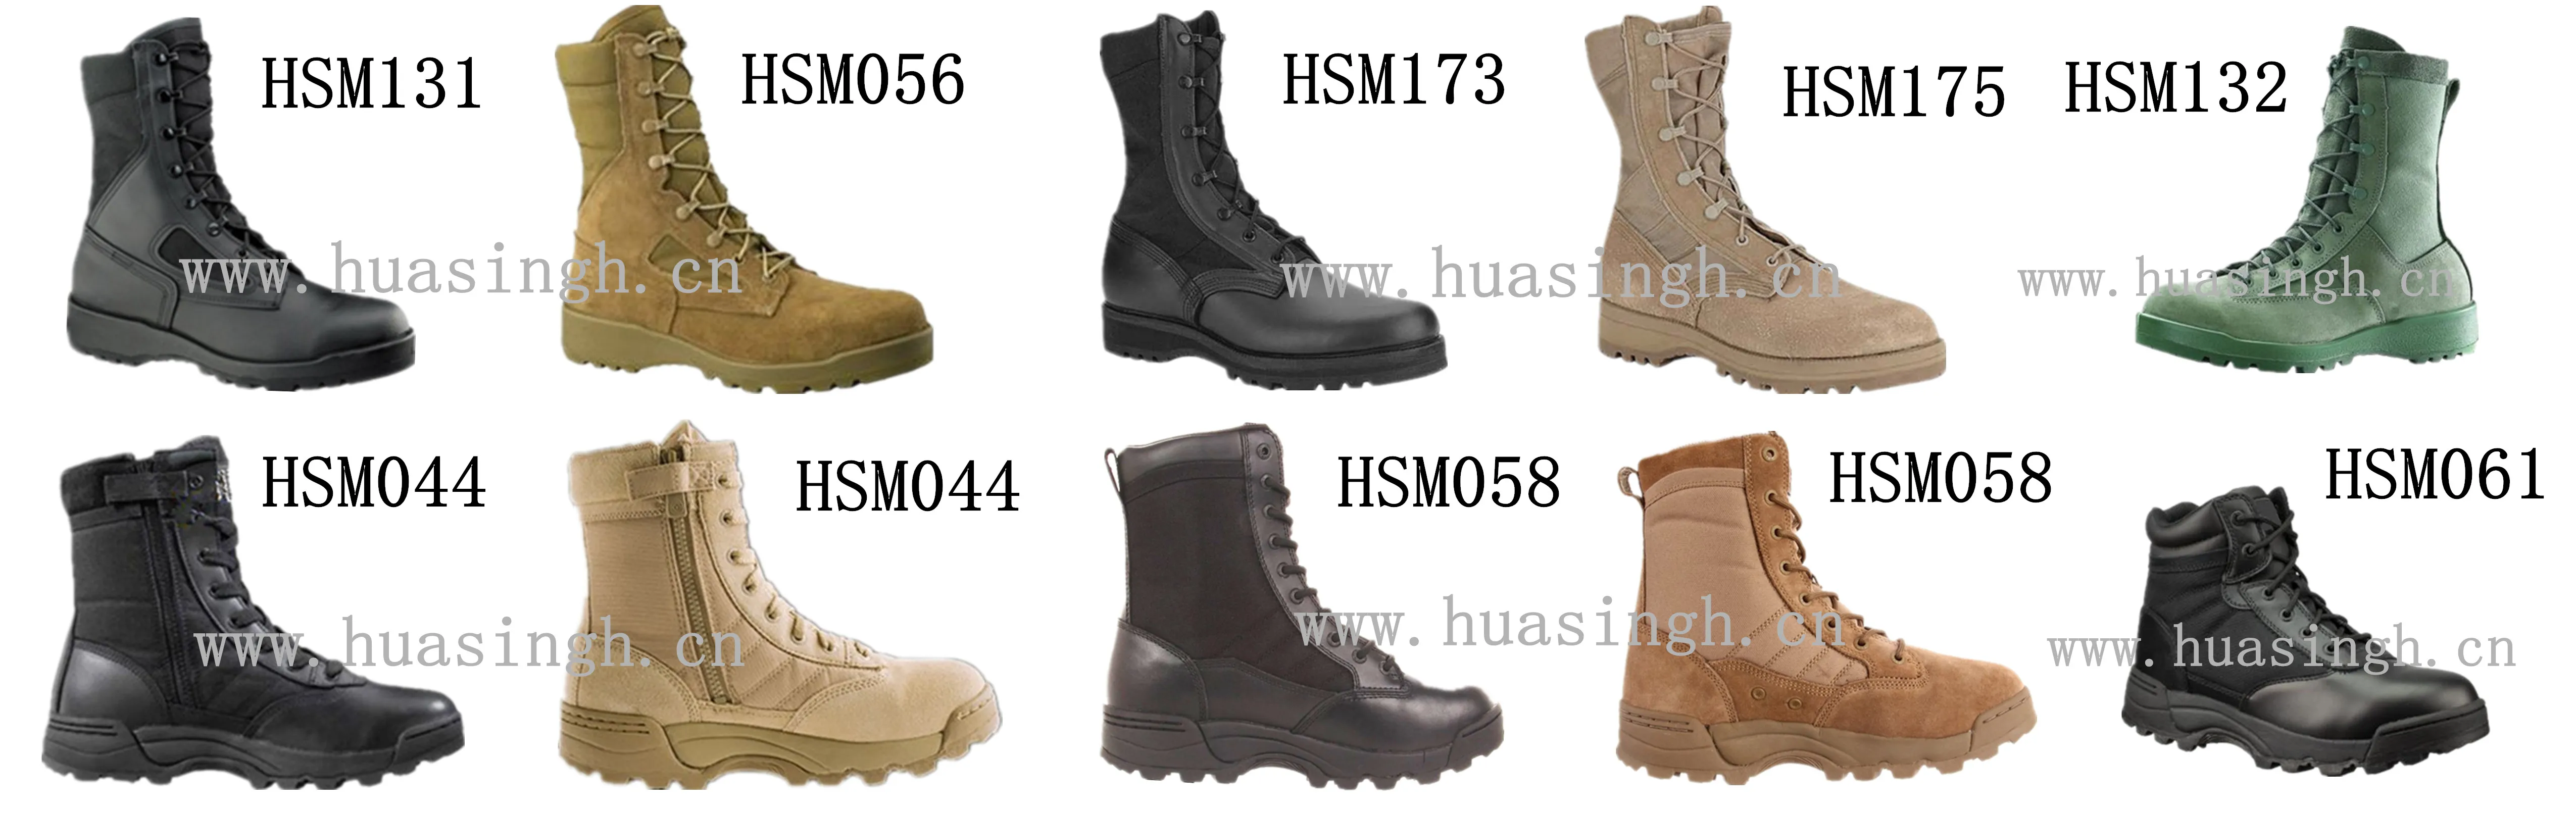 Zh，快速反应战术靴黑褐色低胸户外登山靴hsm167 - Buy 狩猎实战球鞋 